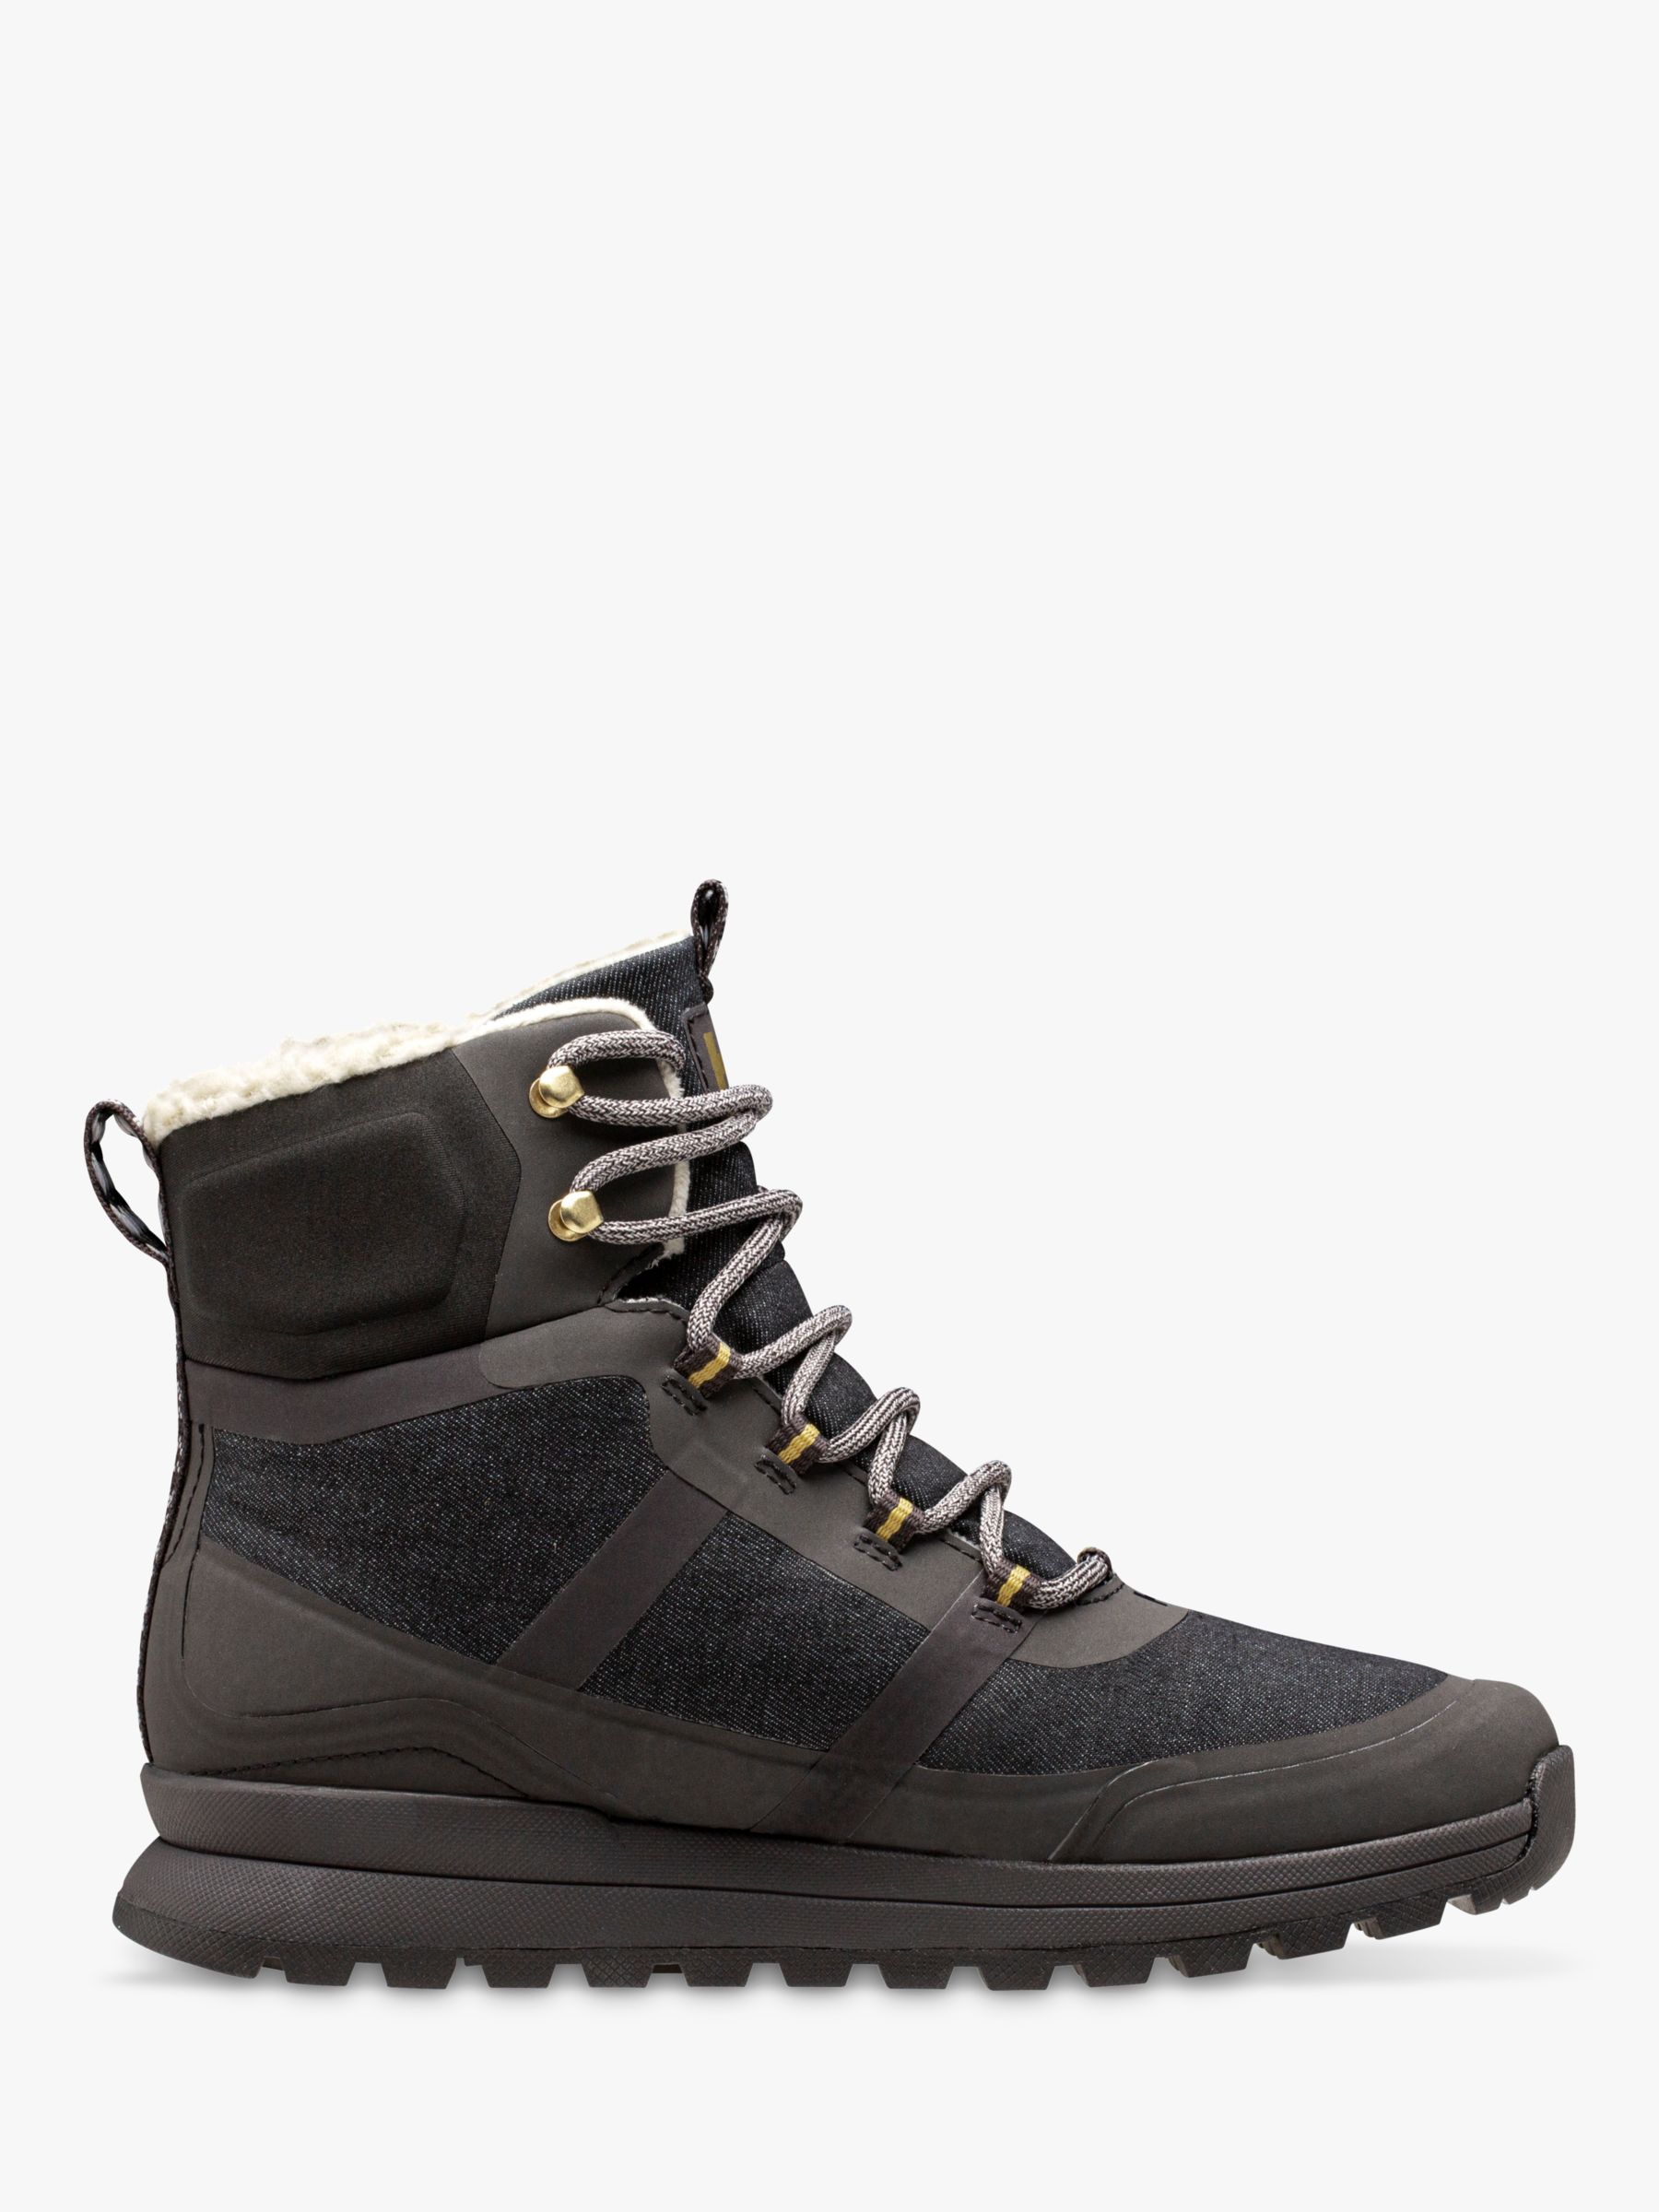 Helly Hansen Whitley Waterproof Winter Boots, Black, 6